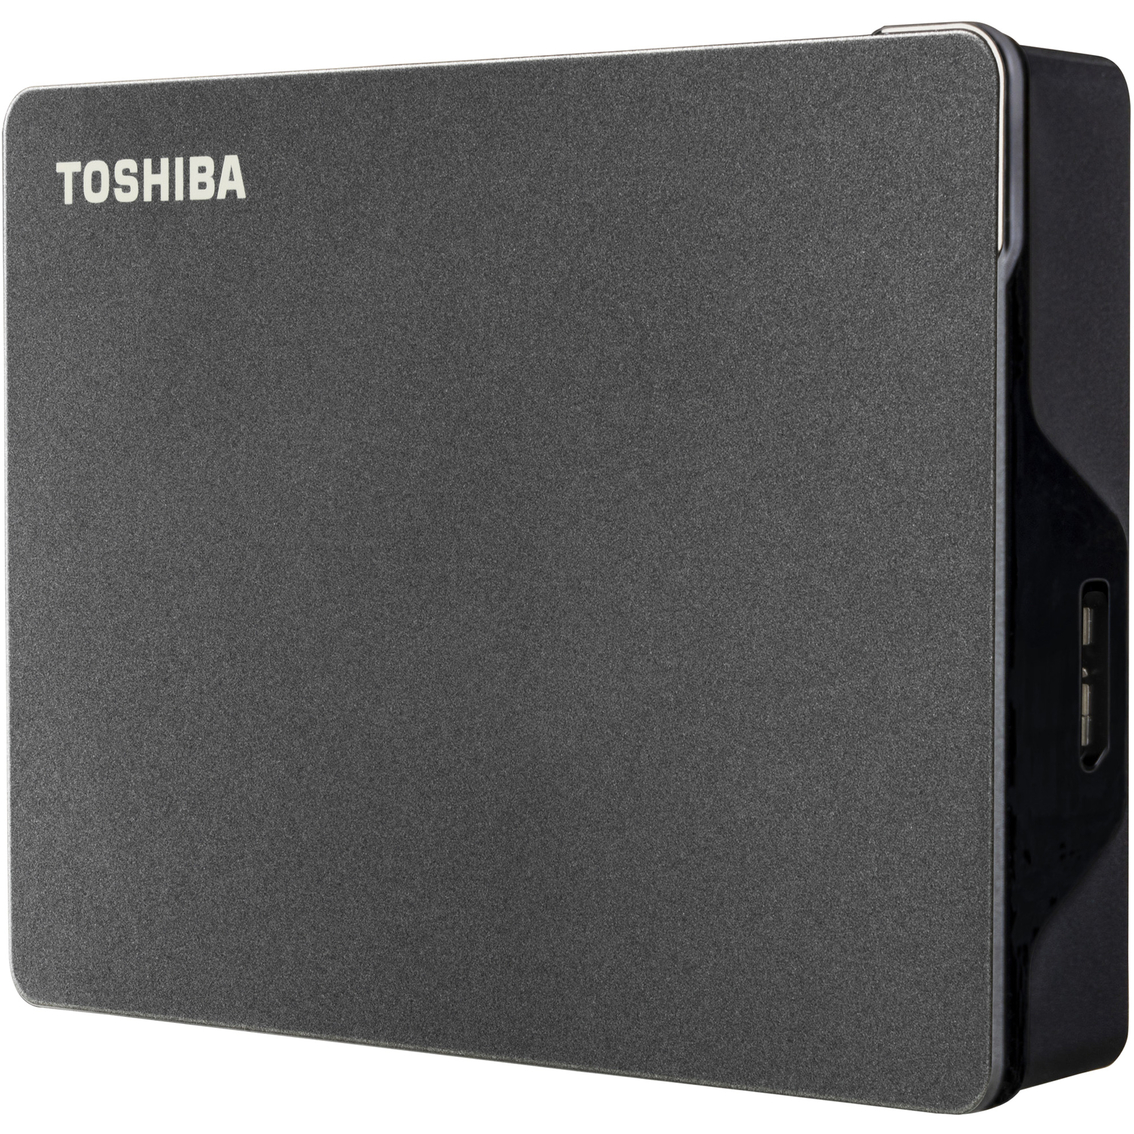 Toshiba Canvio External Gaming 4TB Hard Drive - Image 2 of 4